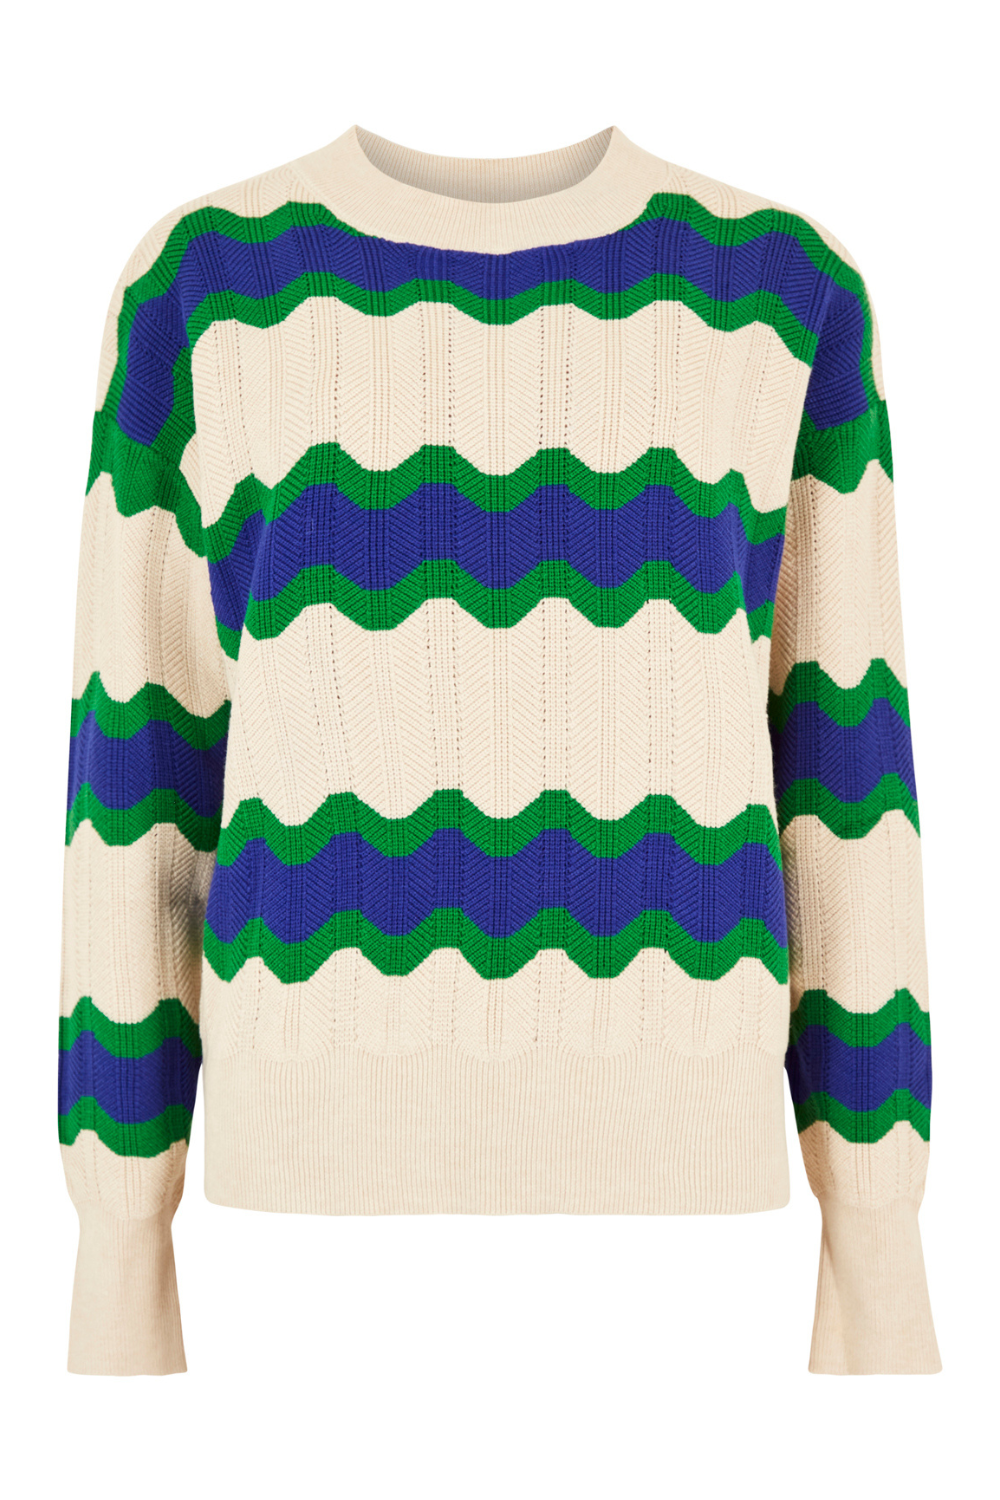 Wavy Lines Sweater